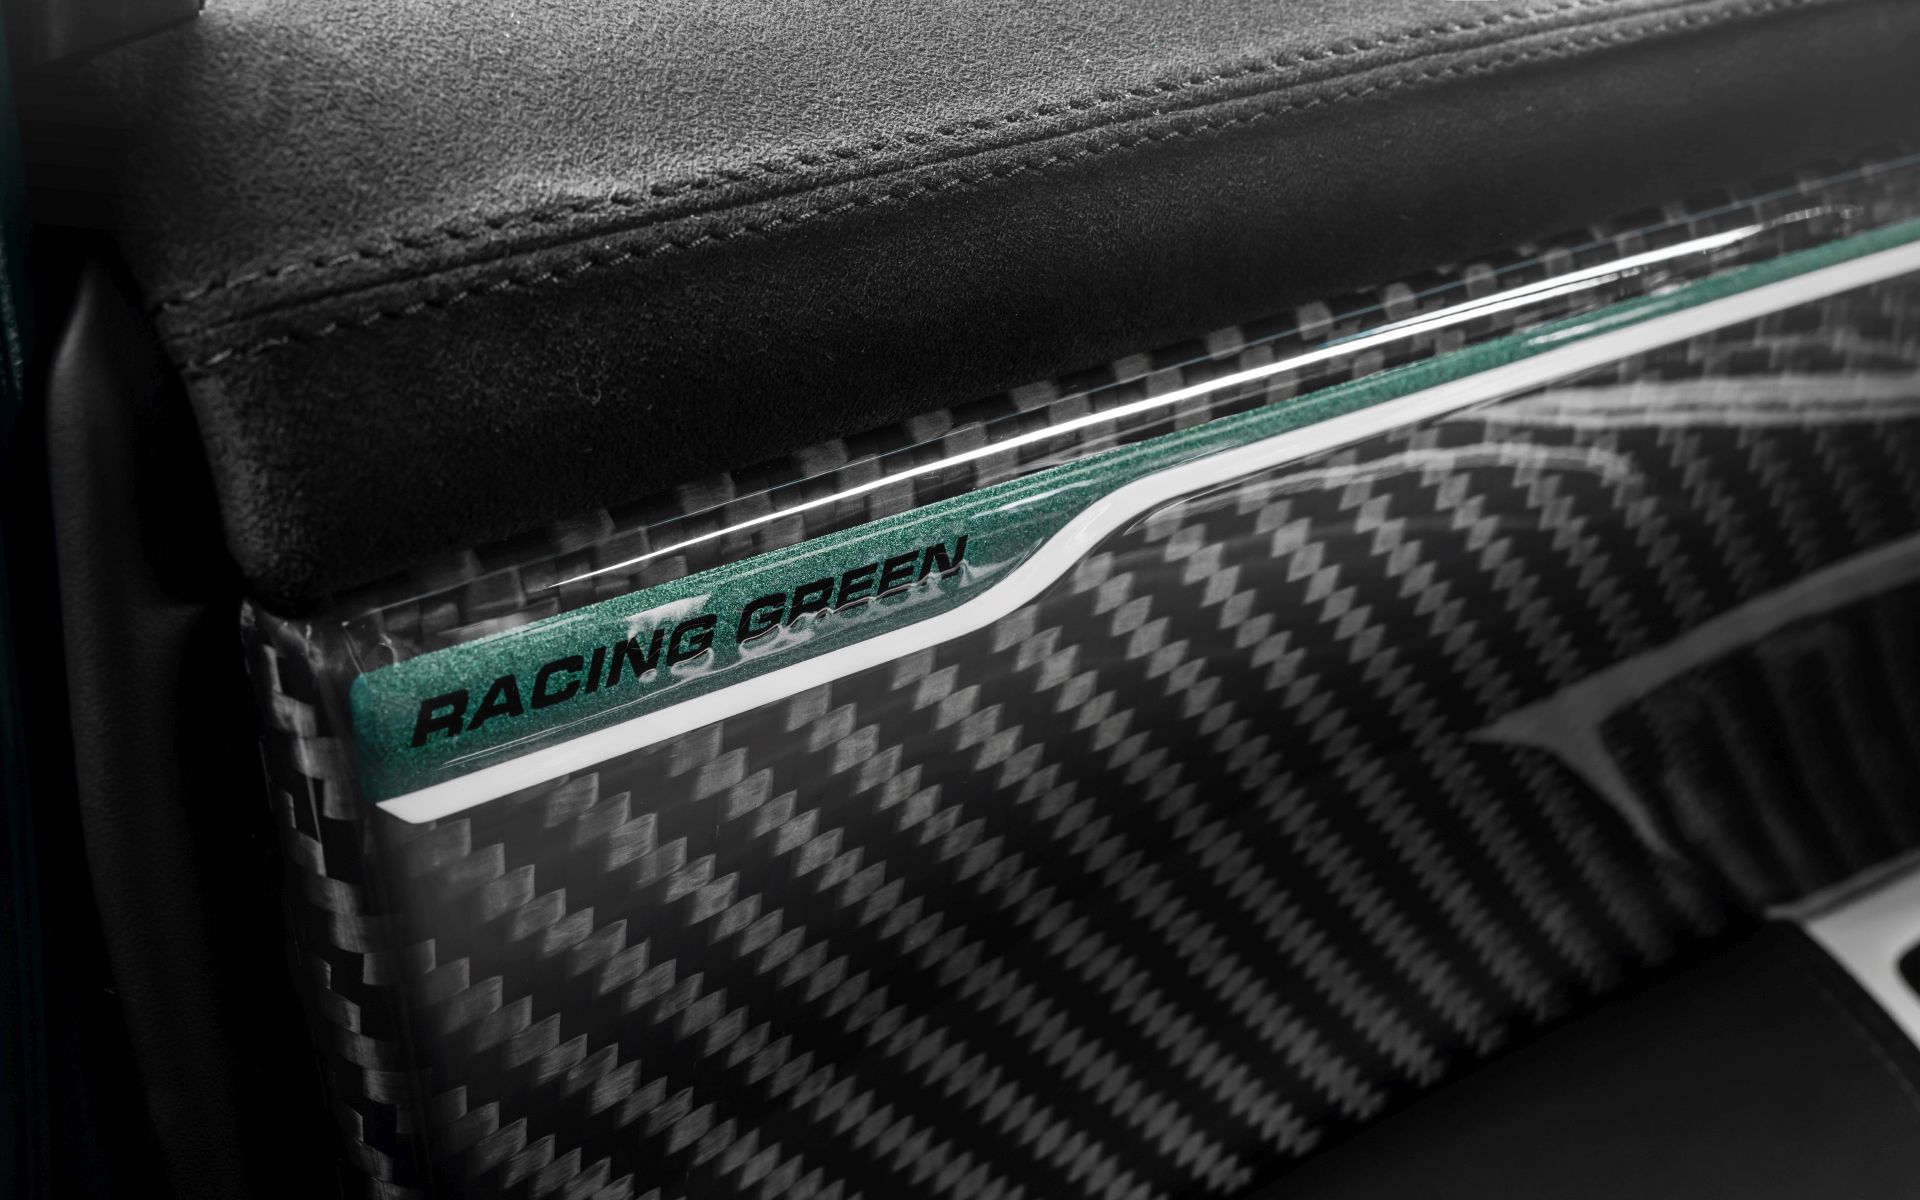 Mercedes-Benz X-Class EXY Racing Green Edition